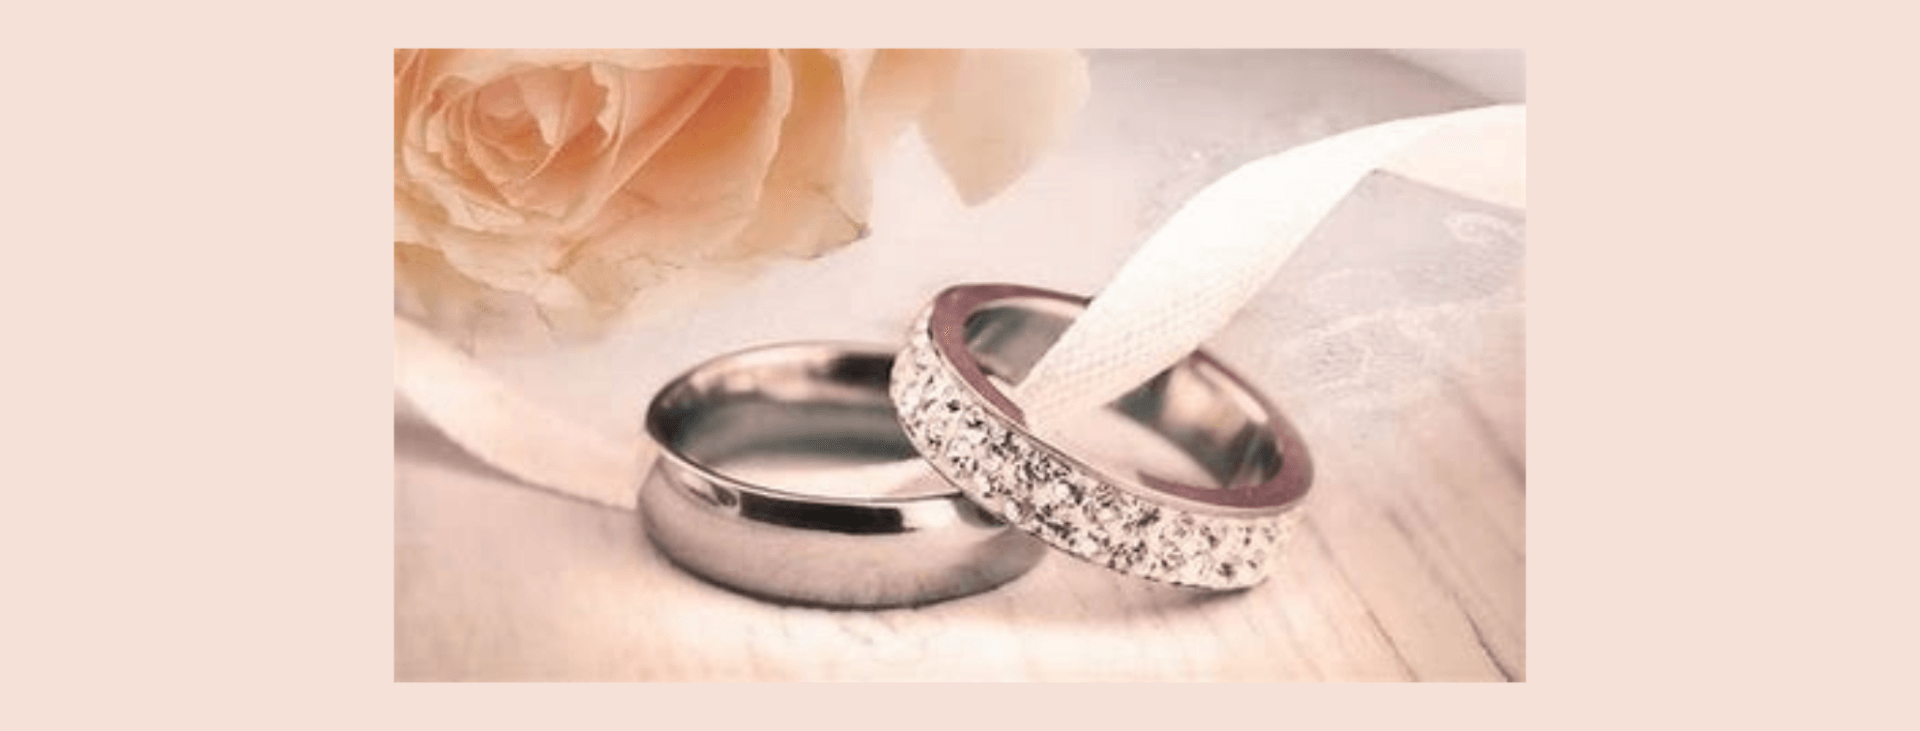 silver wedding bands